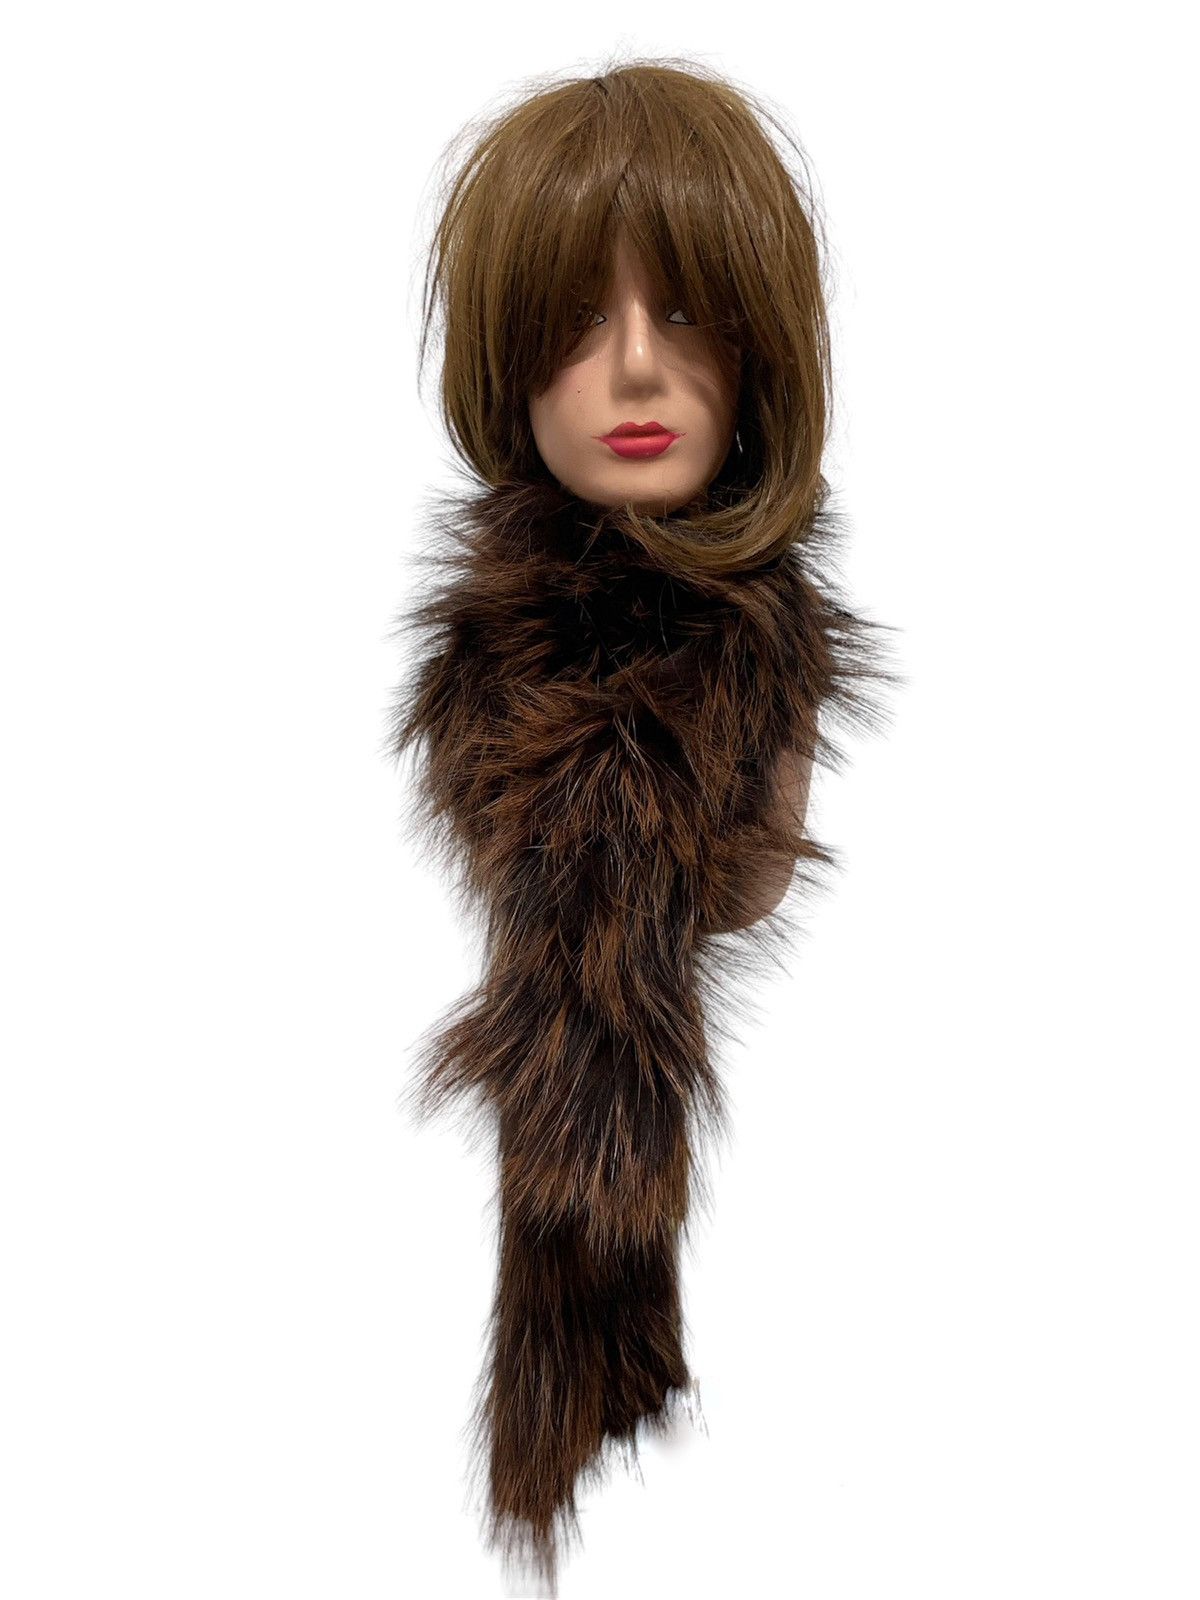 Givenchy Saga Furs Scarf - 1